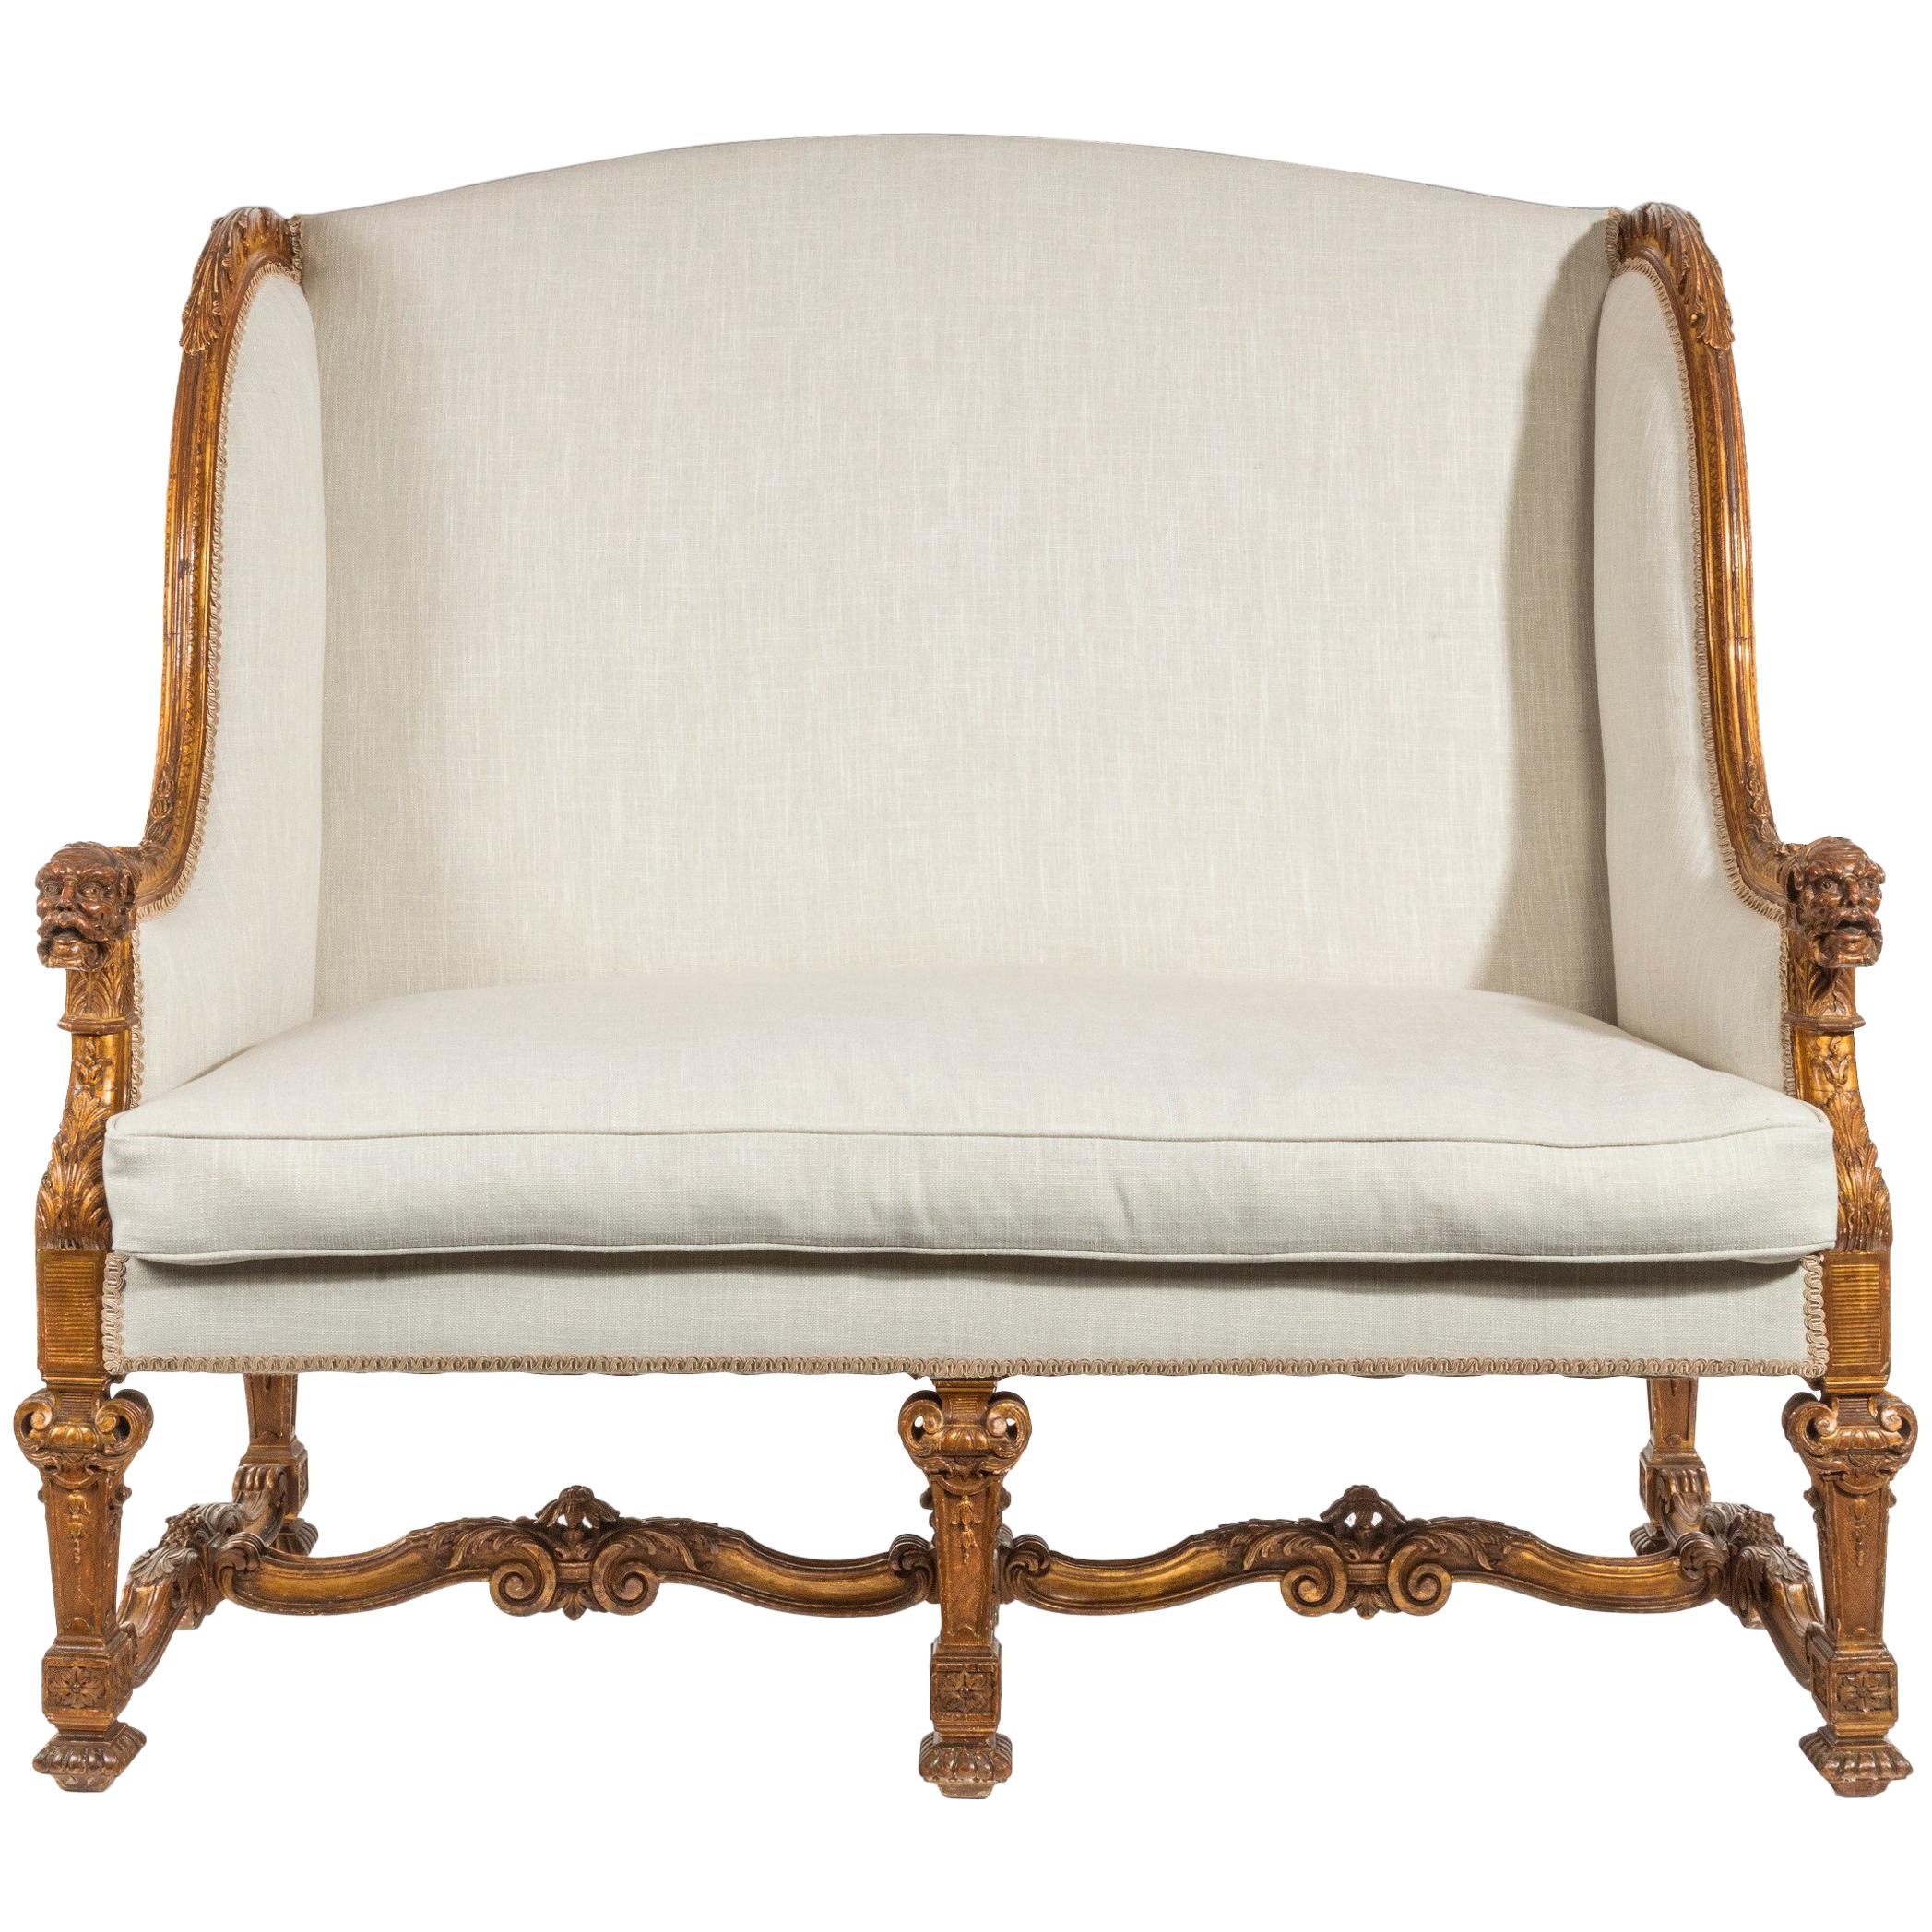 Fine French 19th Century Gilt Louis XIV Style Sofa / Canape